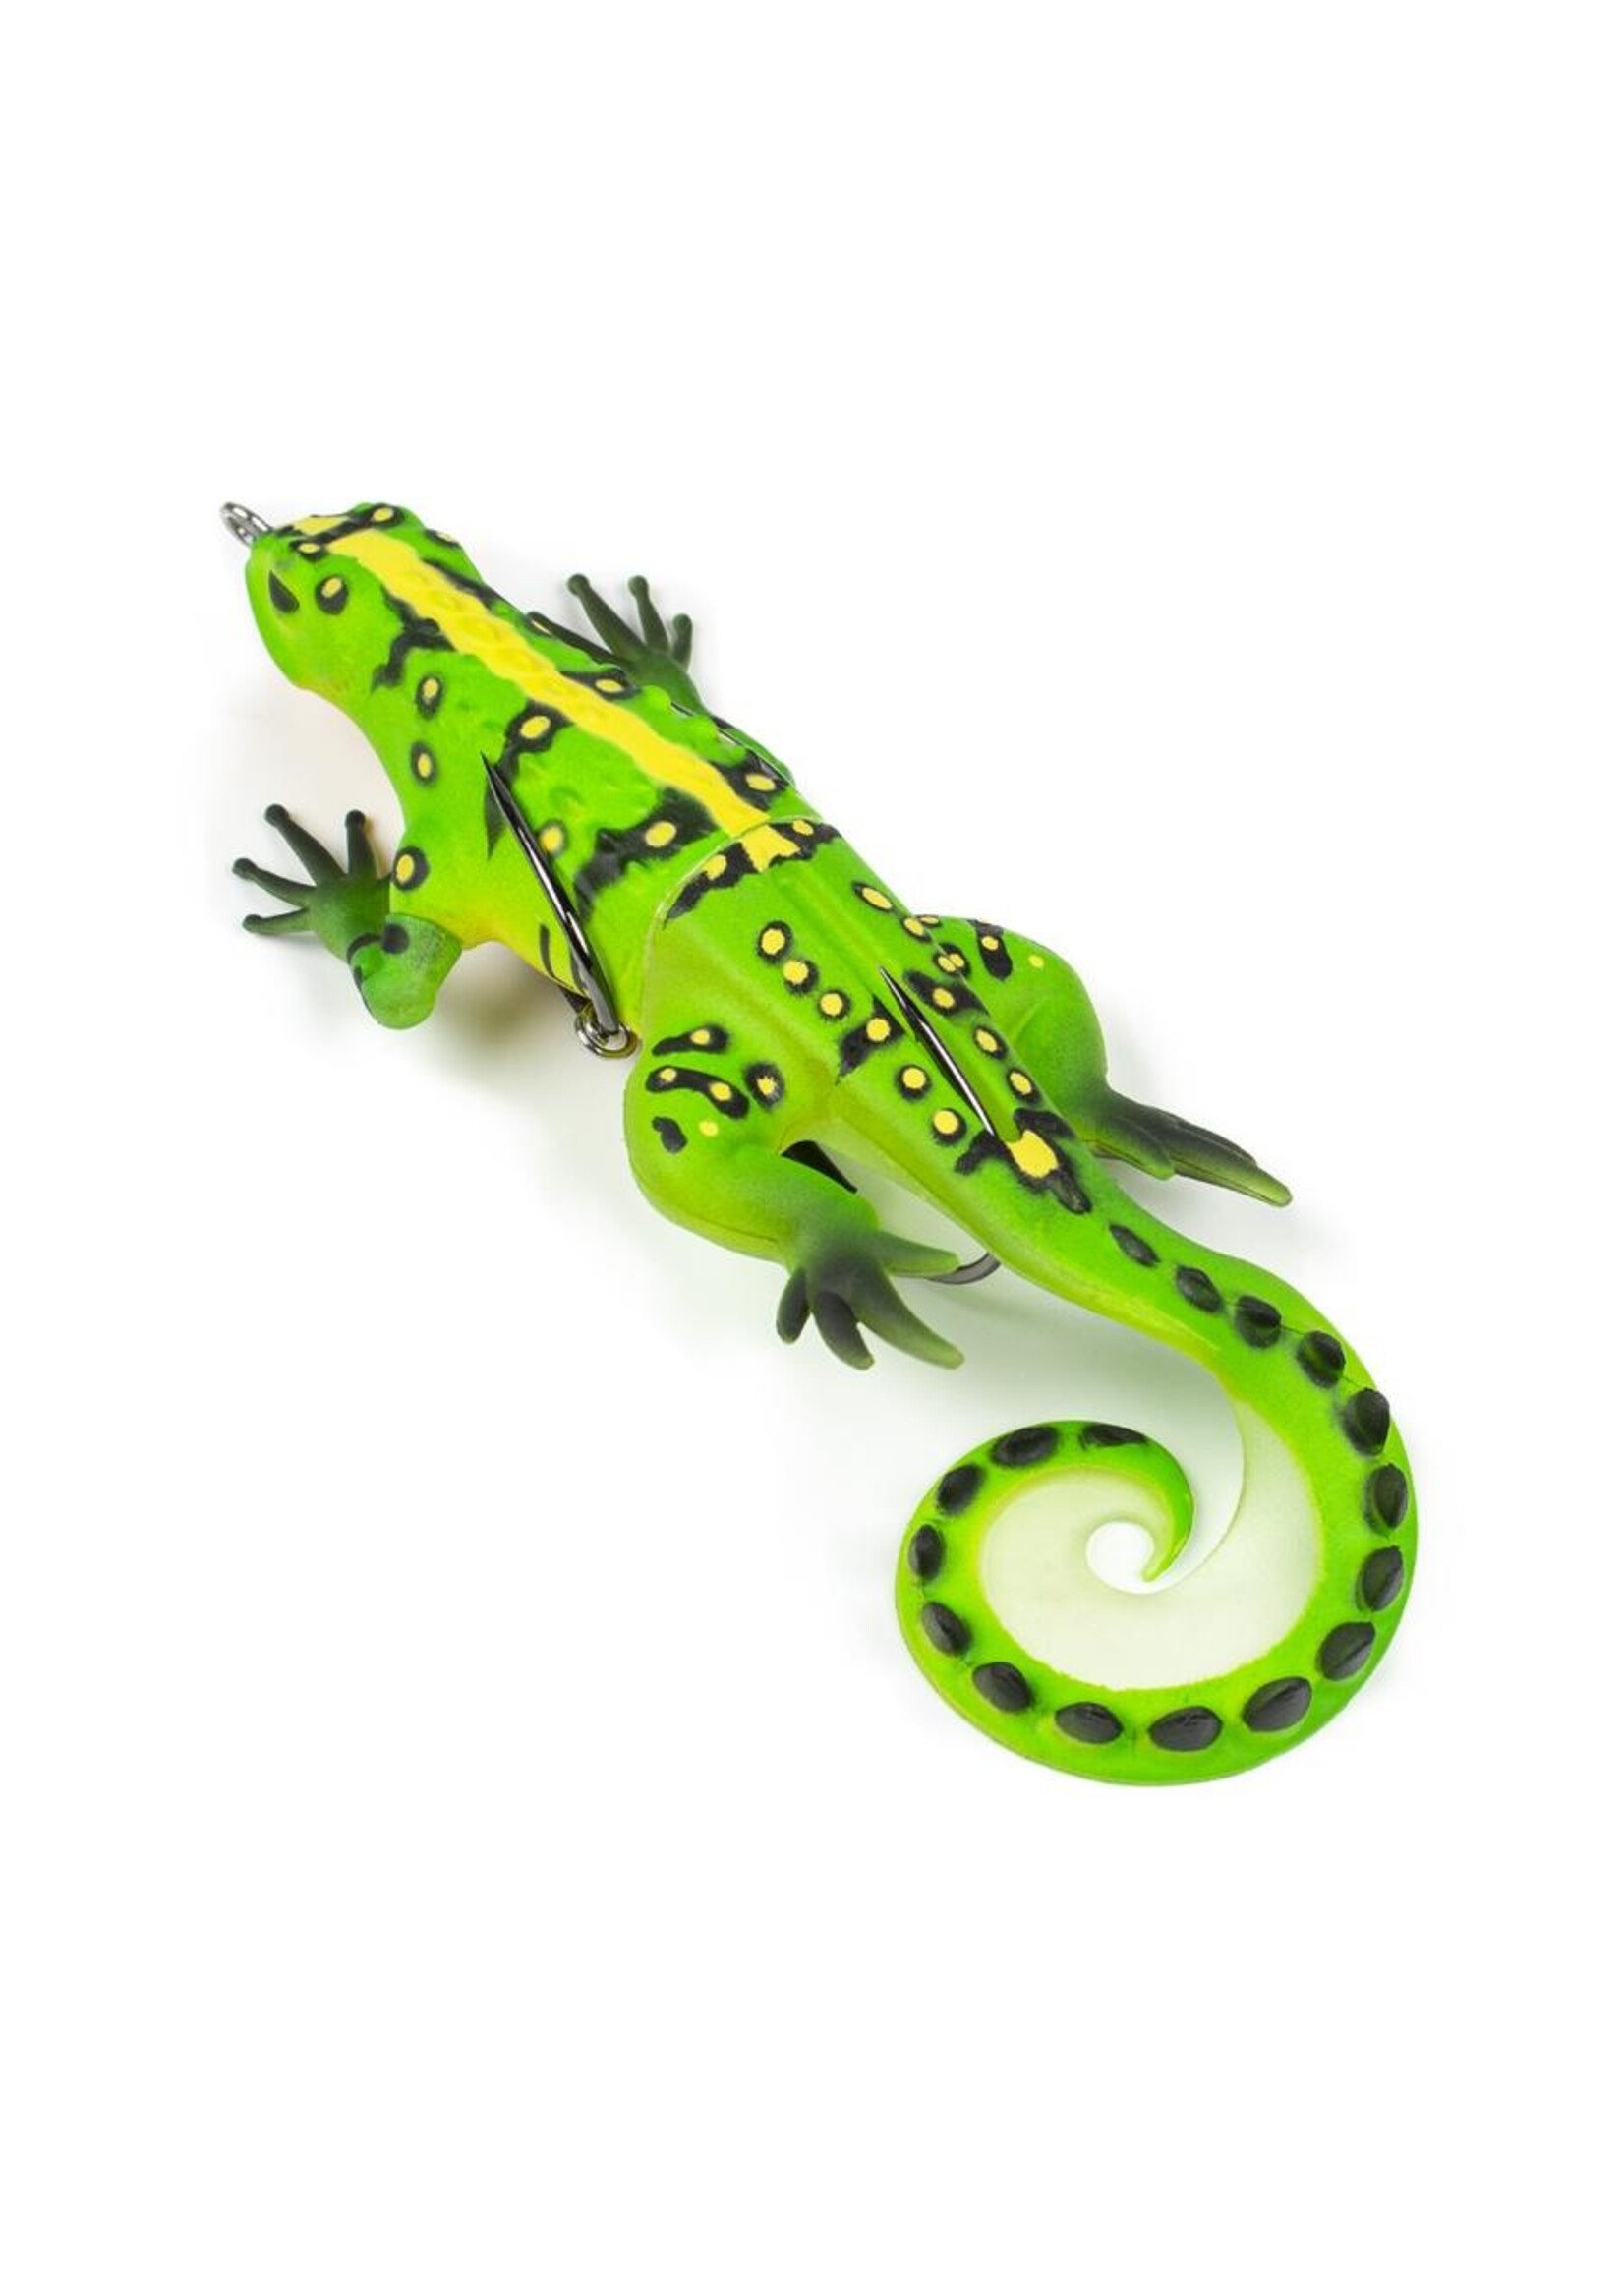 Lunkerhunt Skitter Lizard, Creature Bait, Iggy Iguana, Size: 5.25 & 3/4 oz, Green